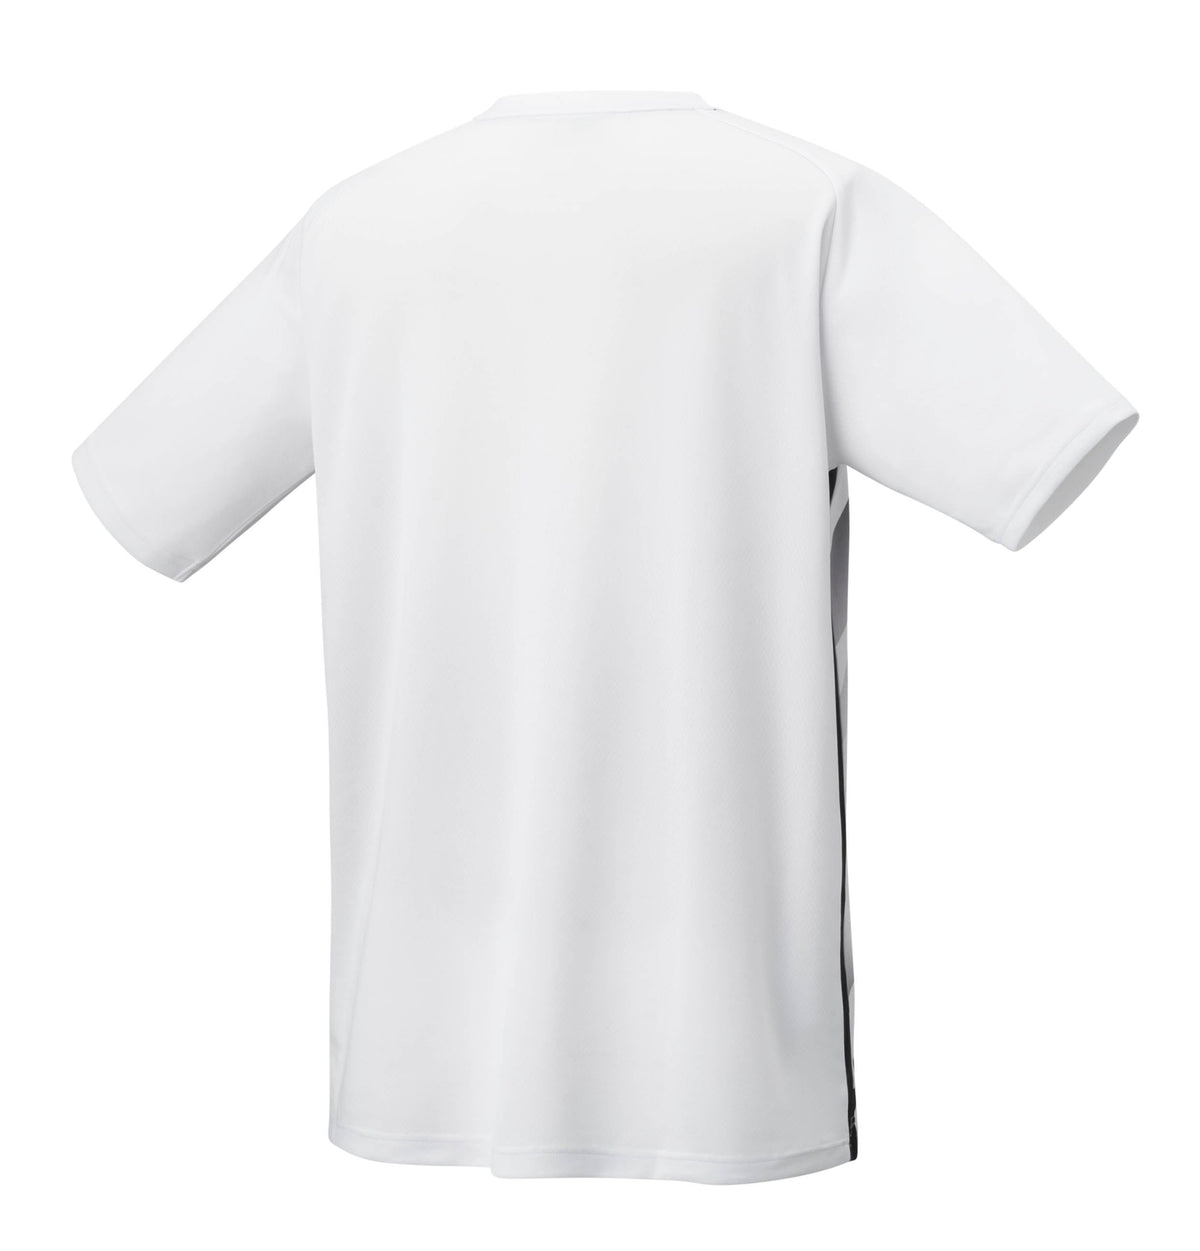 Yonex 16692 Practice T-Shirt Mens (White)